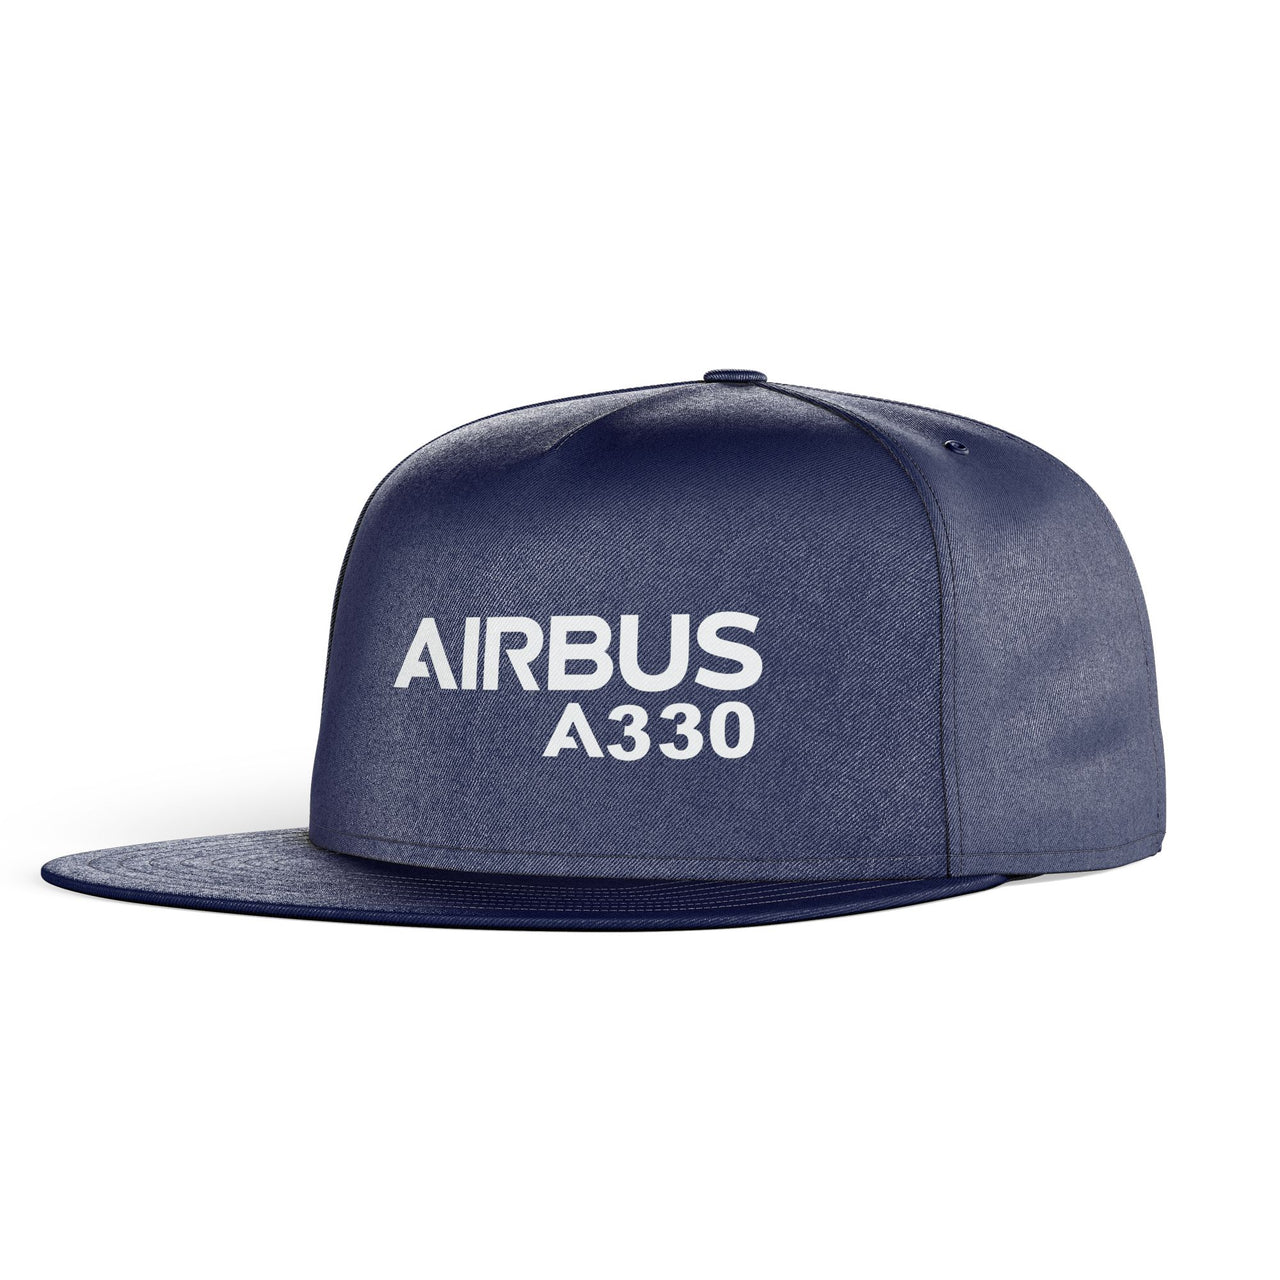 Airbus A330 & Text Designed Snapback Caps & Hats